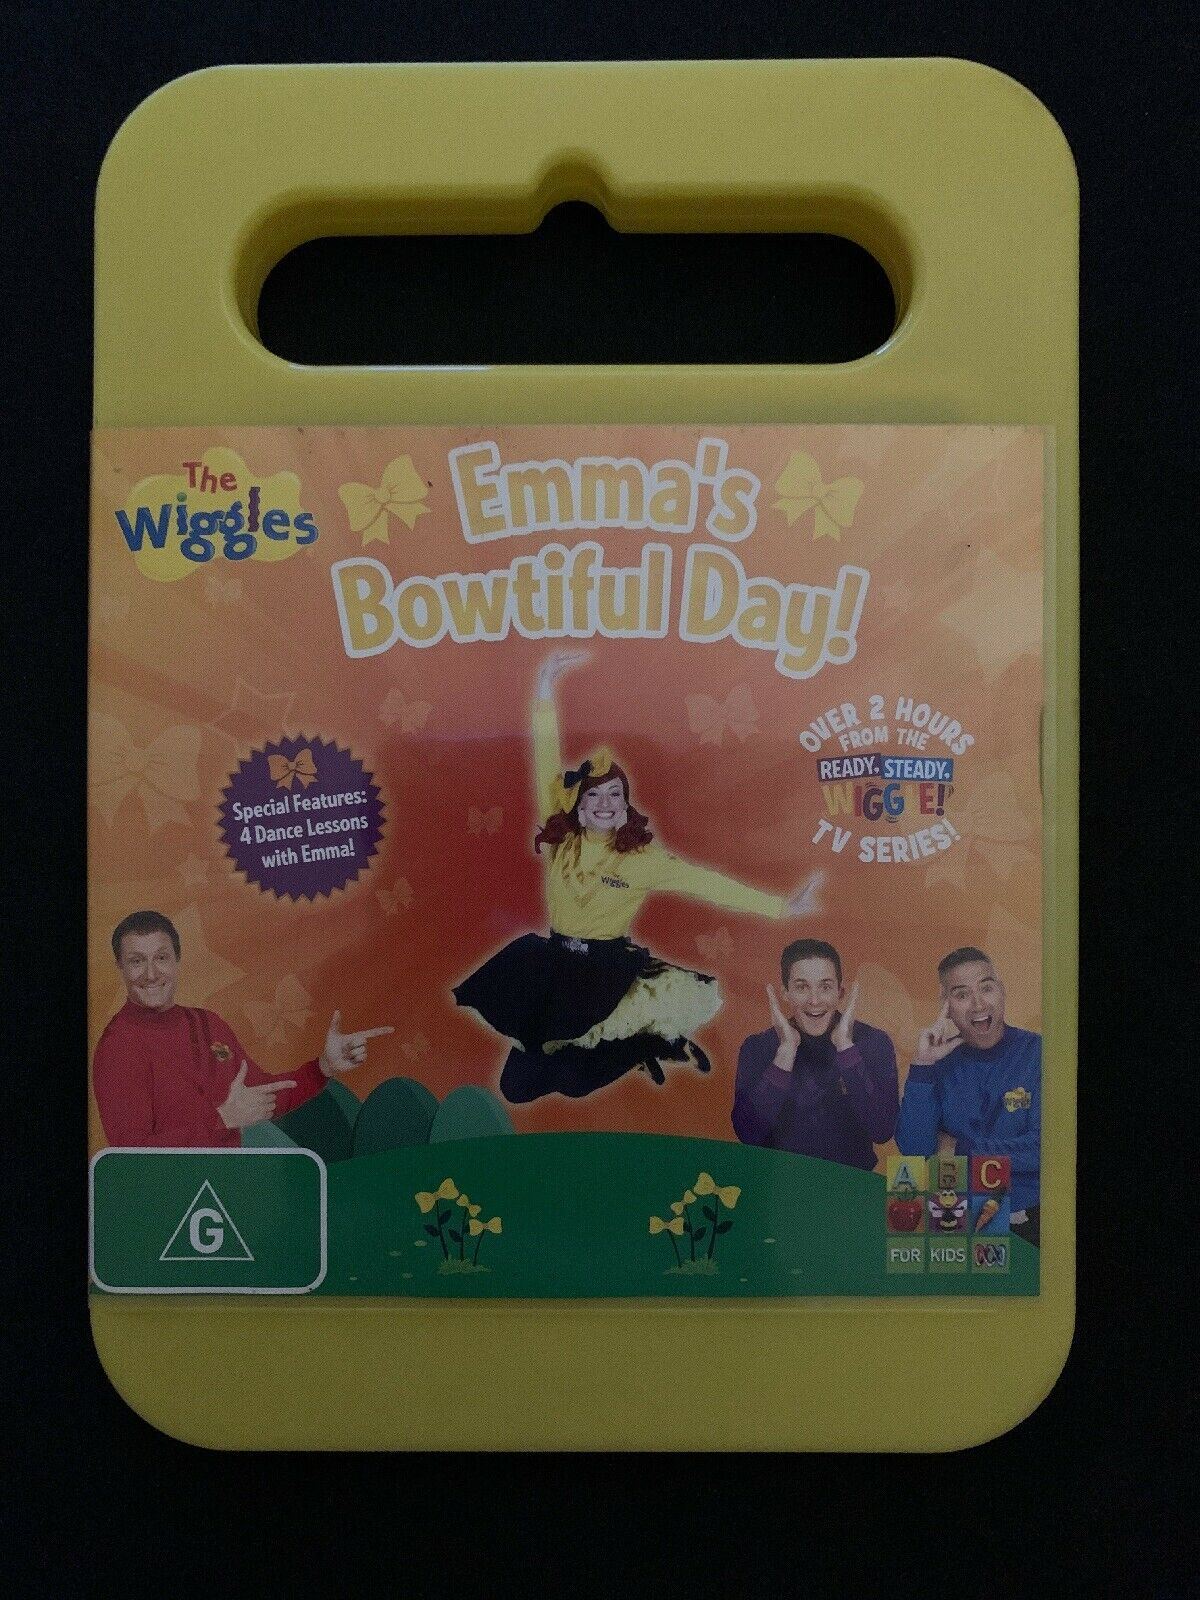 The Wiggles - Emma's Bowtiful Day! (DVD) Region 4 FREE OZ POSTAGE